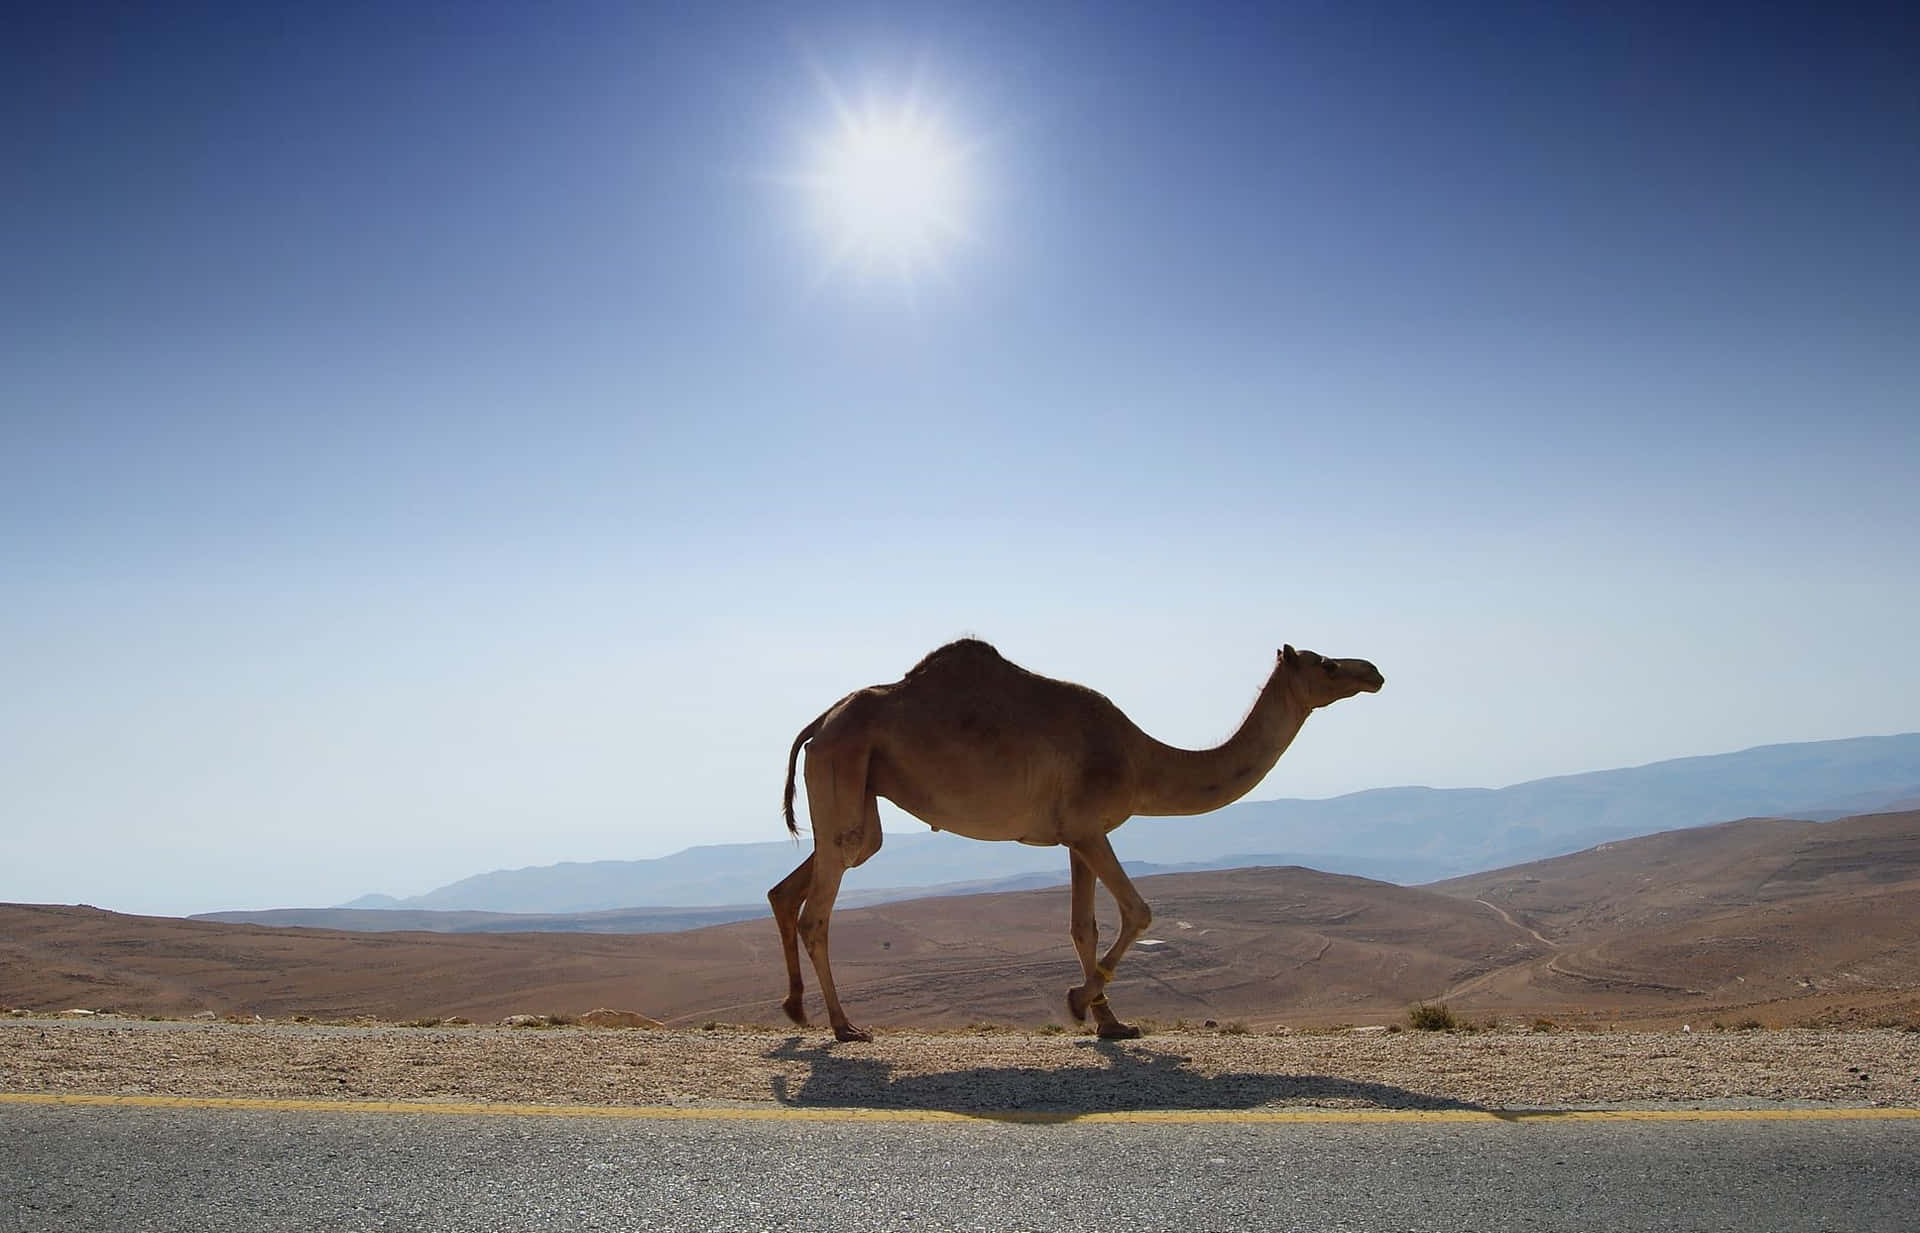 A Camel Crossing the Desert Sands